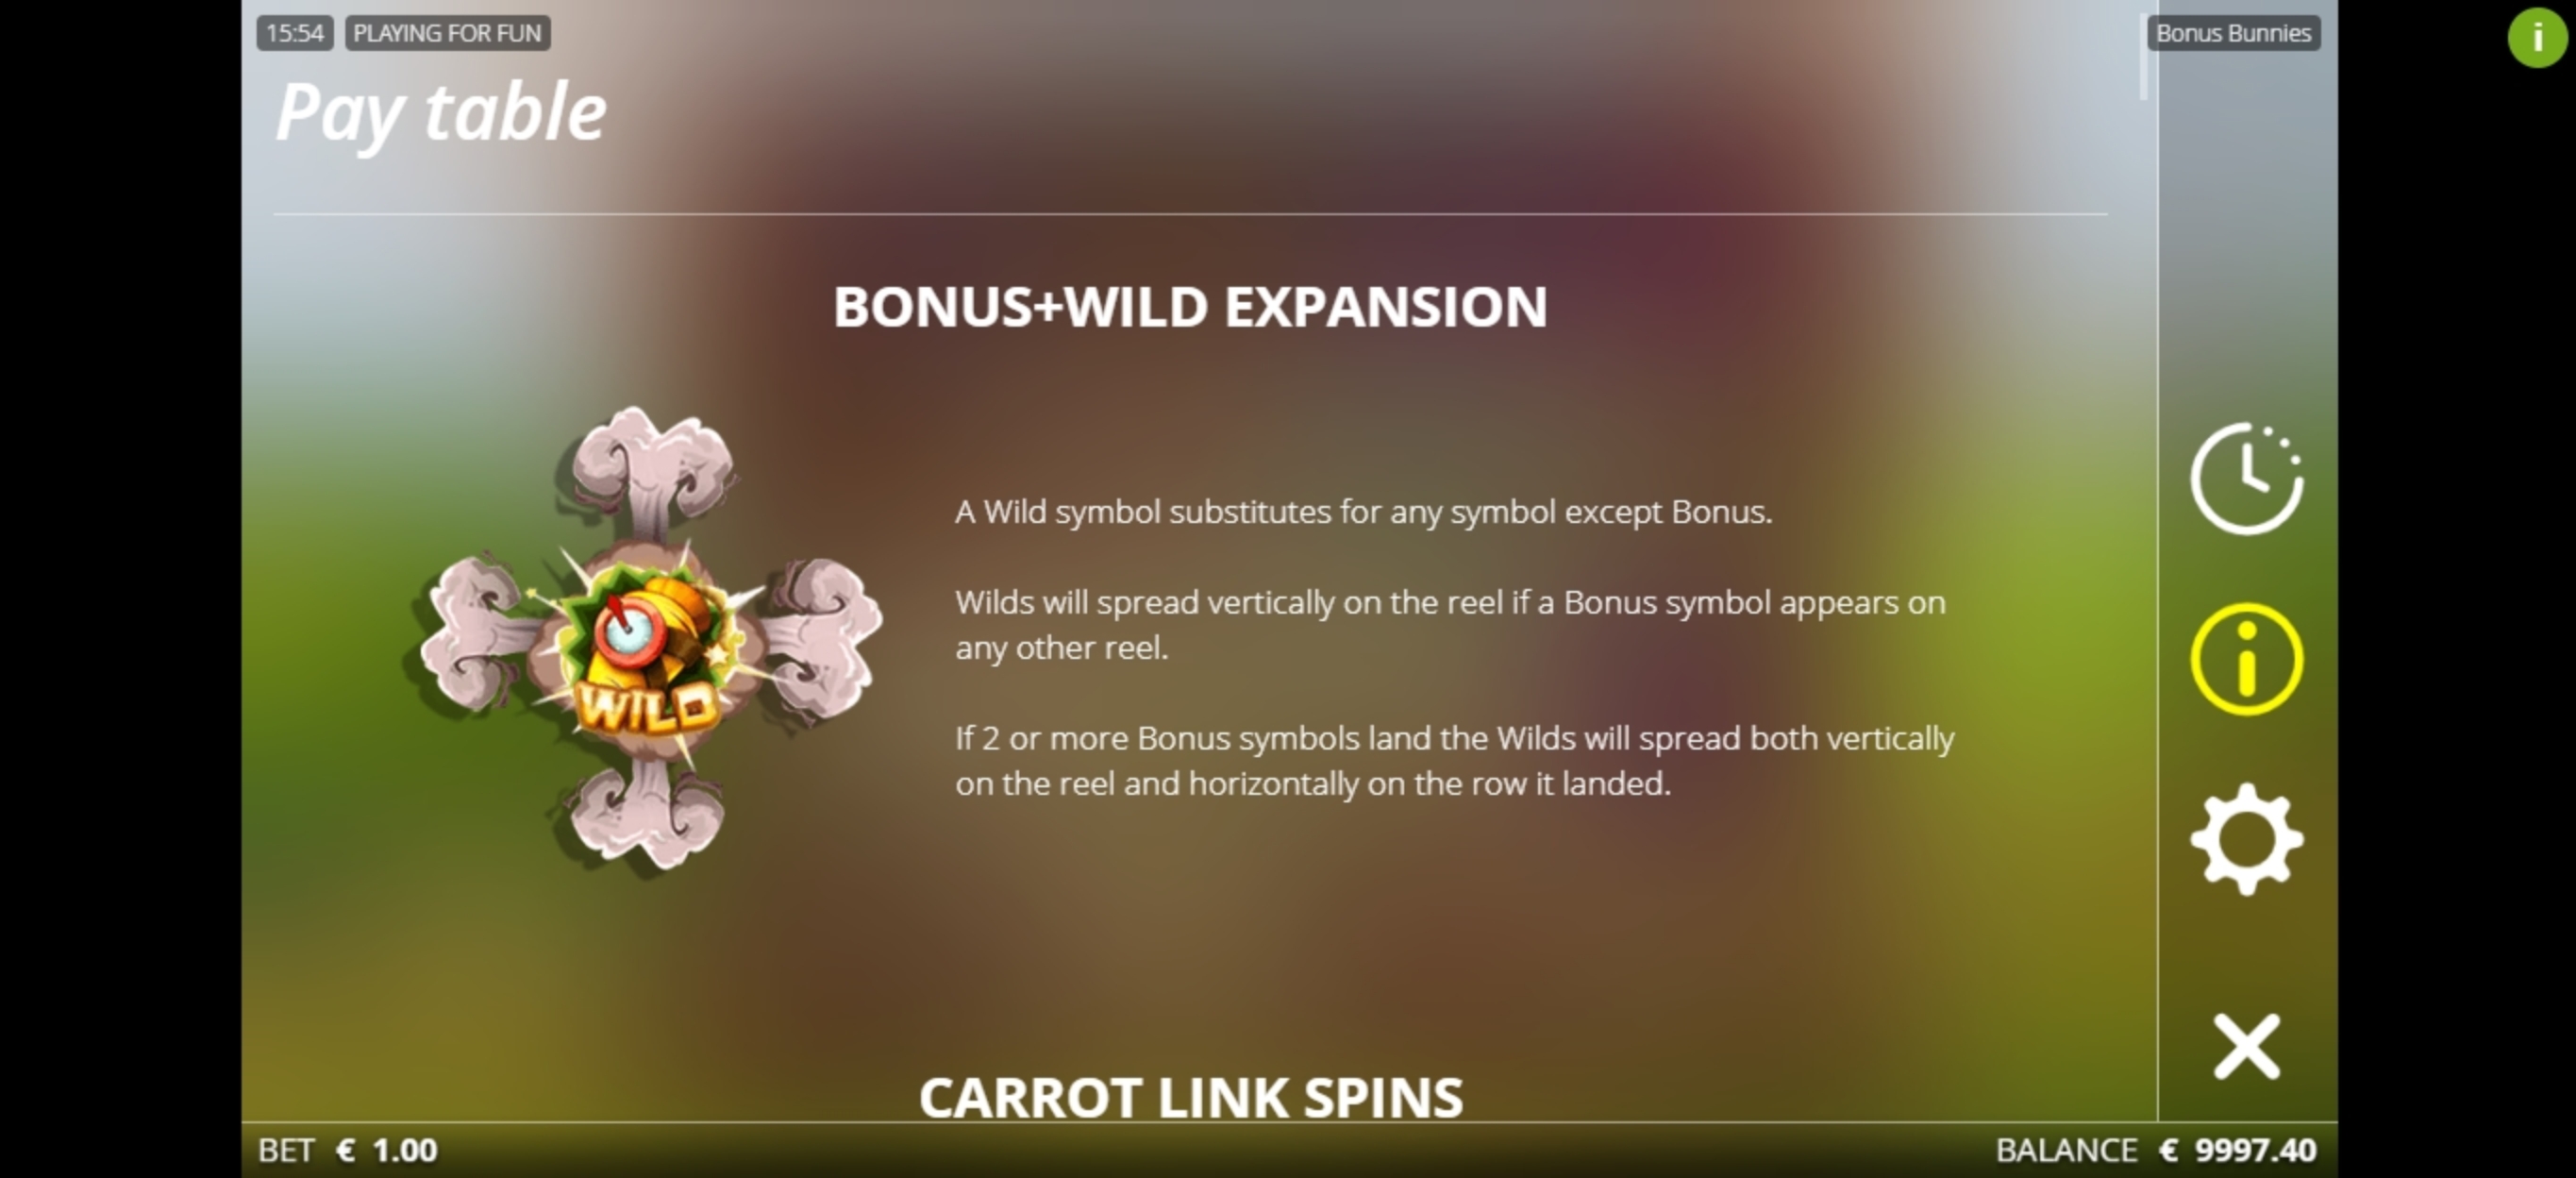 Info of Bonus Bunnies Slot Game by Nolimit City